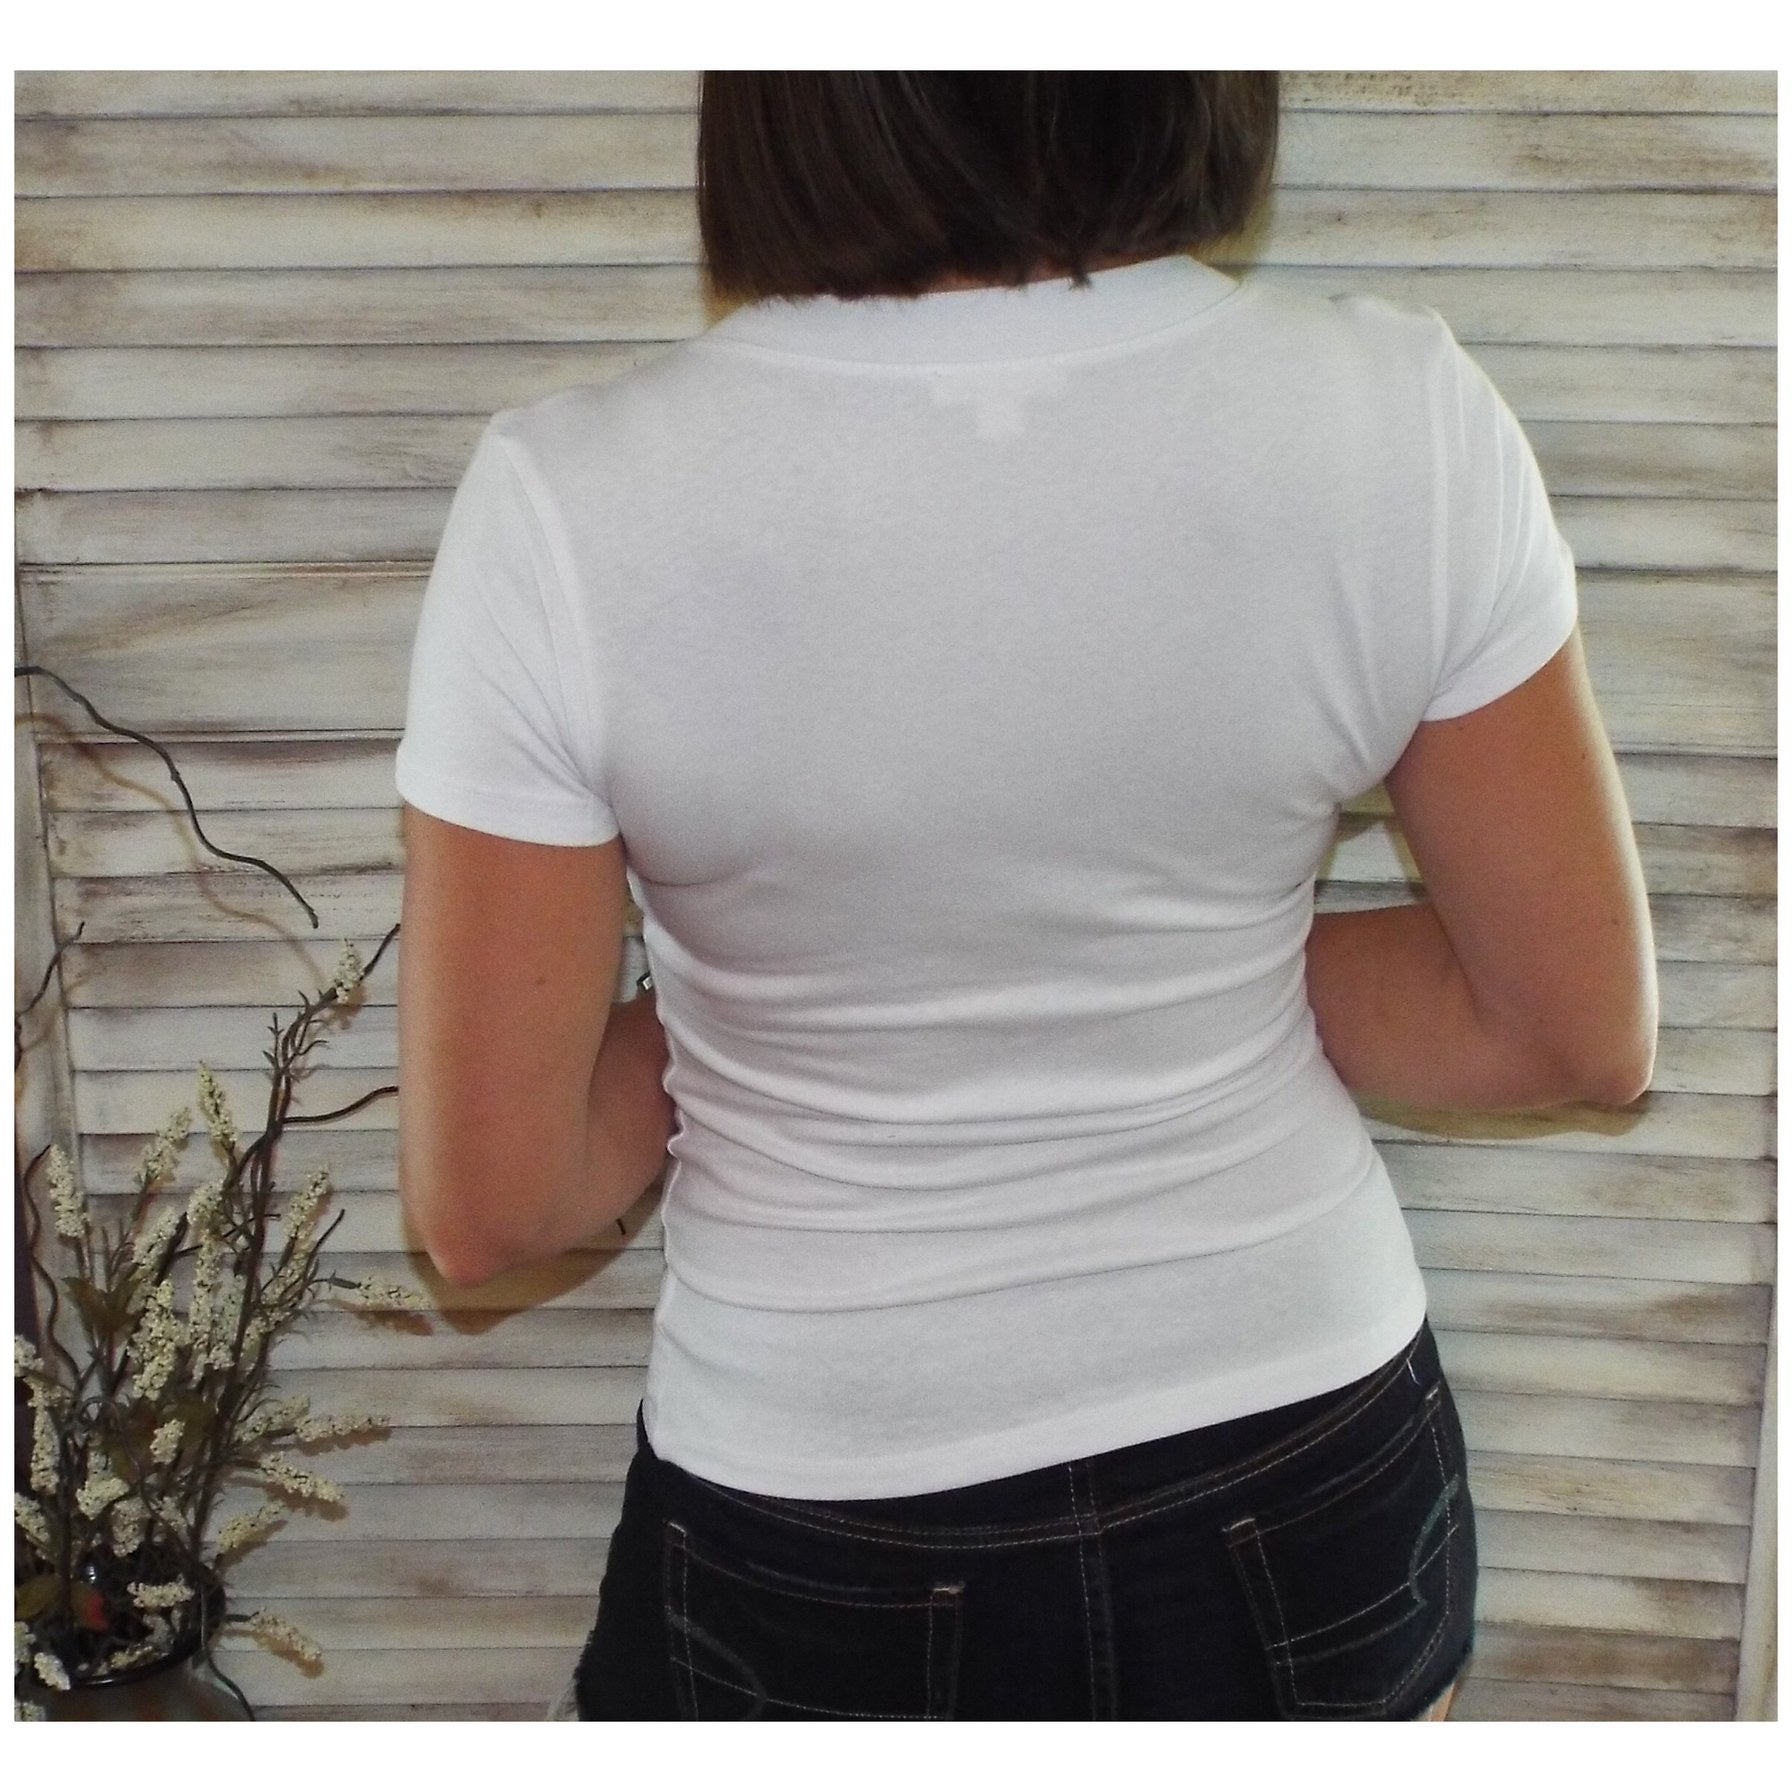 “Basic Babe” Low Cut V-Neck Cleavage Baby Slimming Basic Tee Shirt White